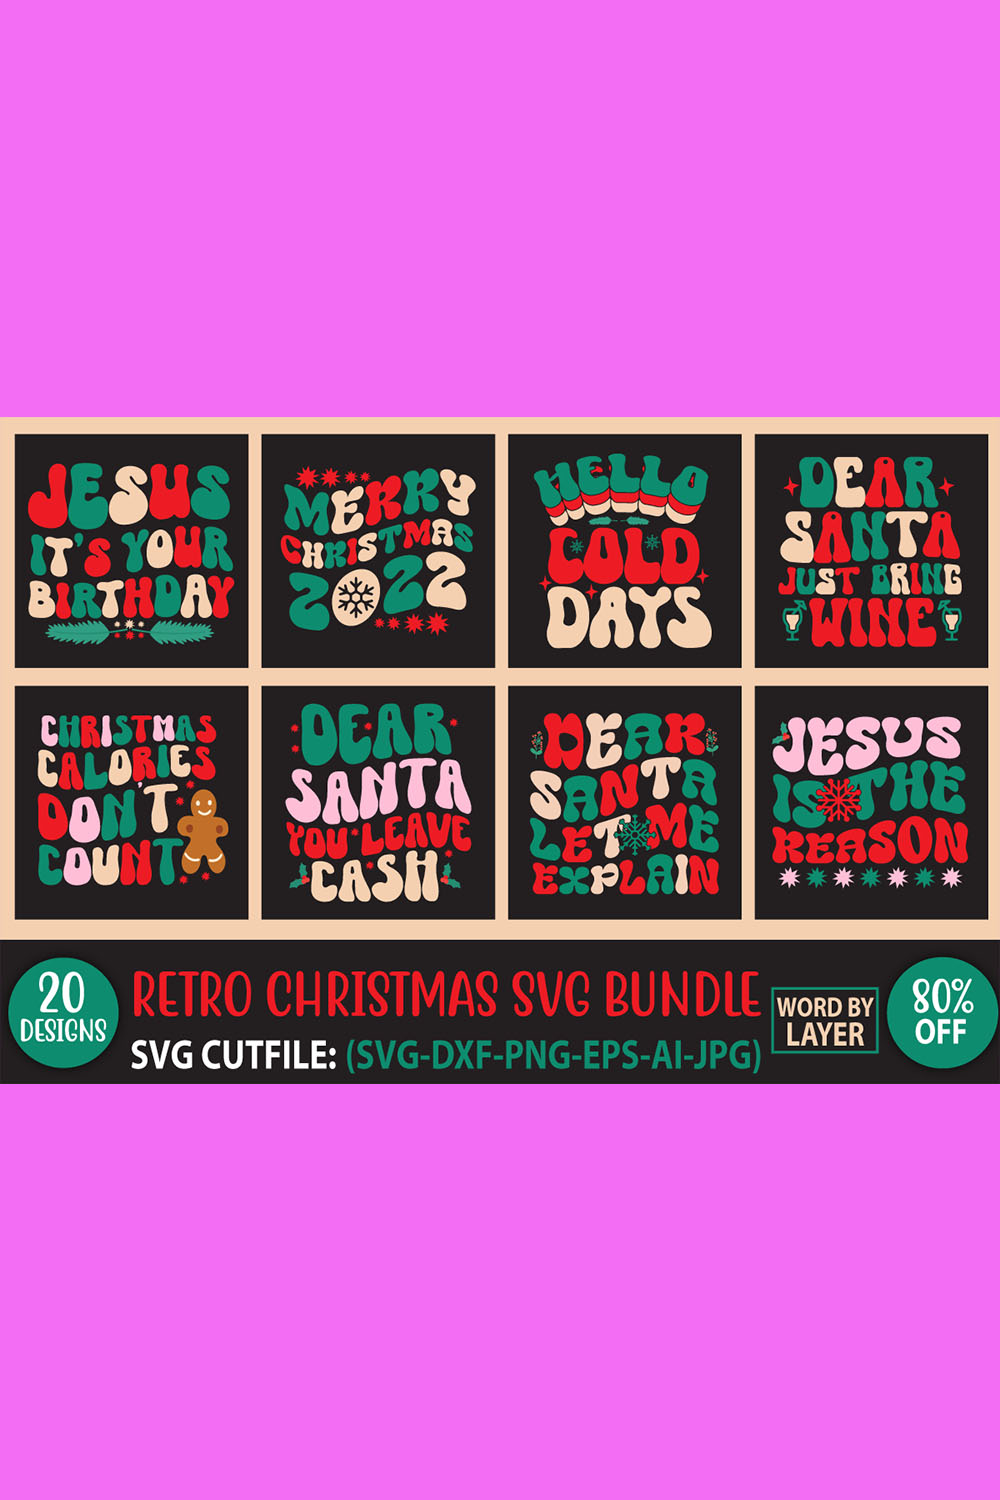 Retro Christmas SVG Bundle pinterest image.